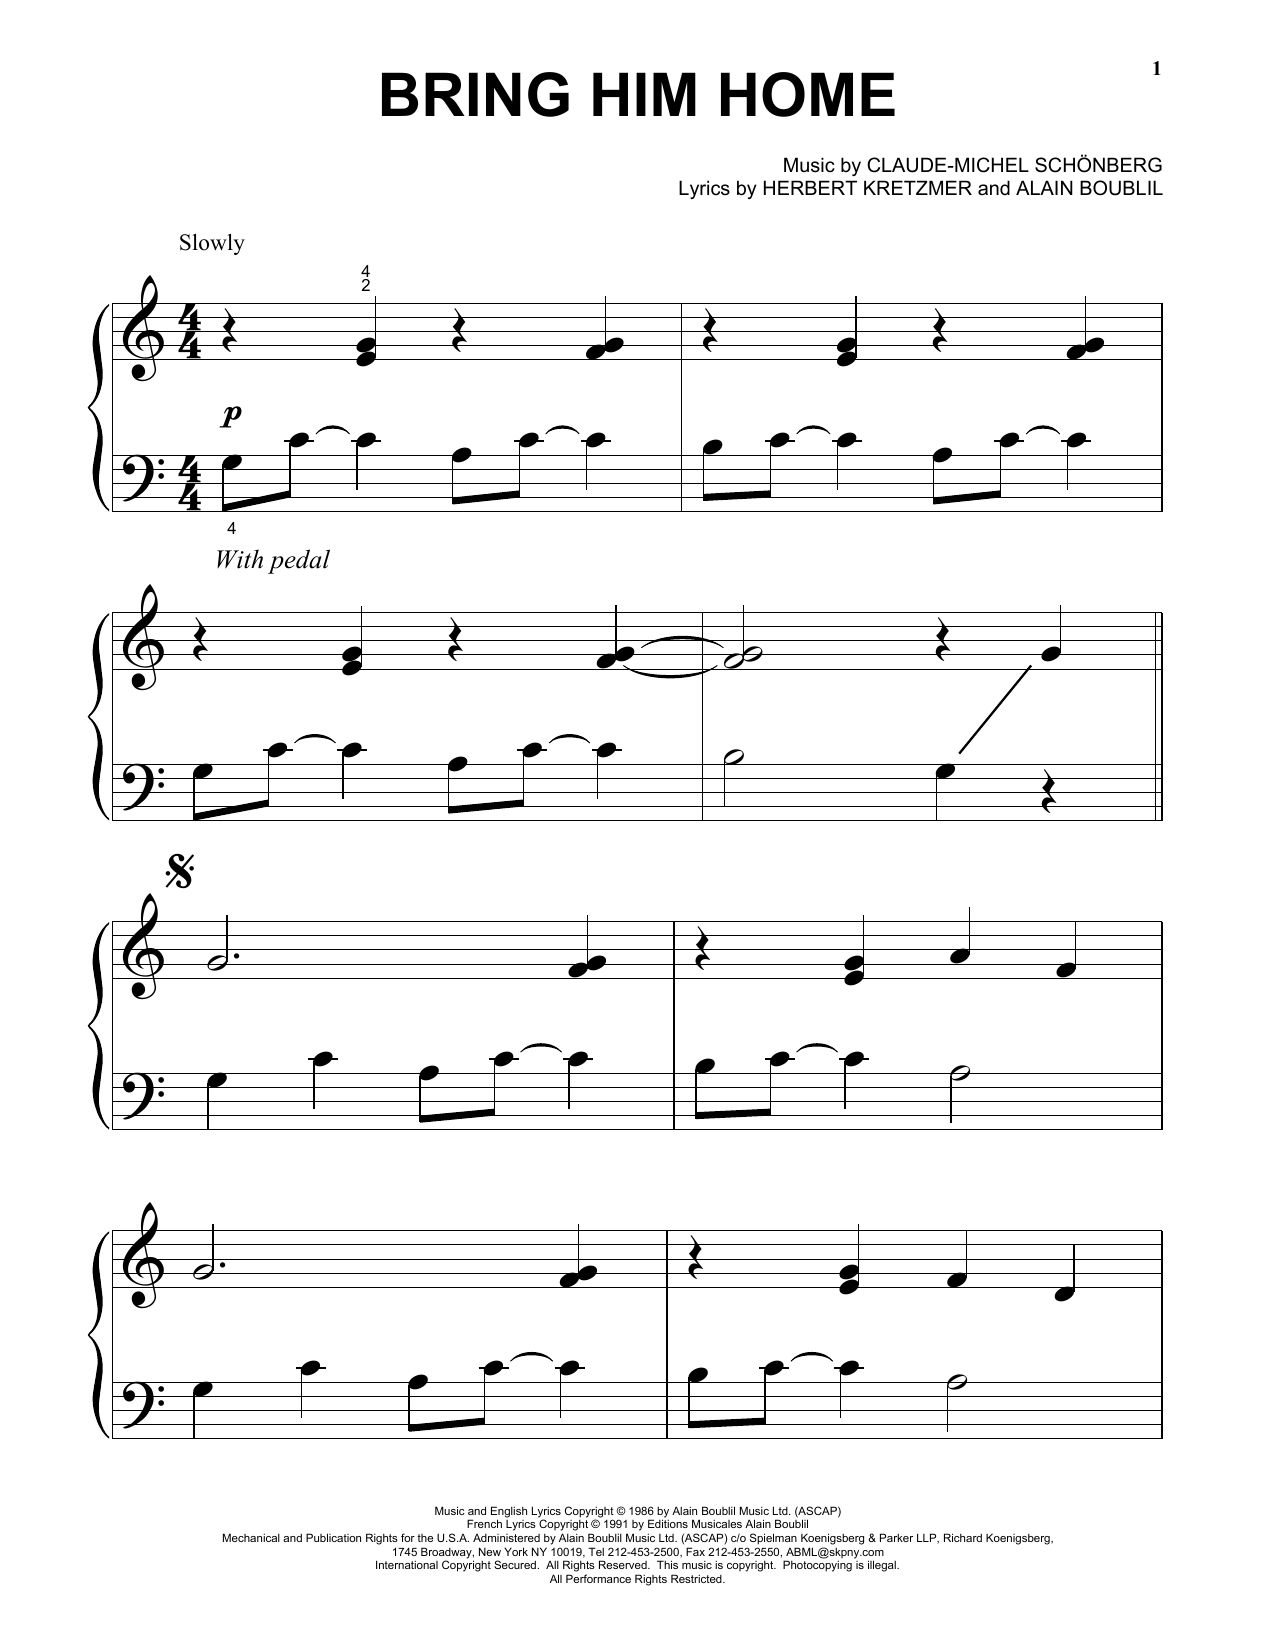 Claude-Michel Schönberg Bring Him Home Sheet Music Notes & Chords for Violin - Download or Print PDF